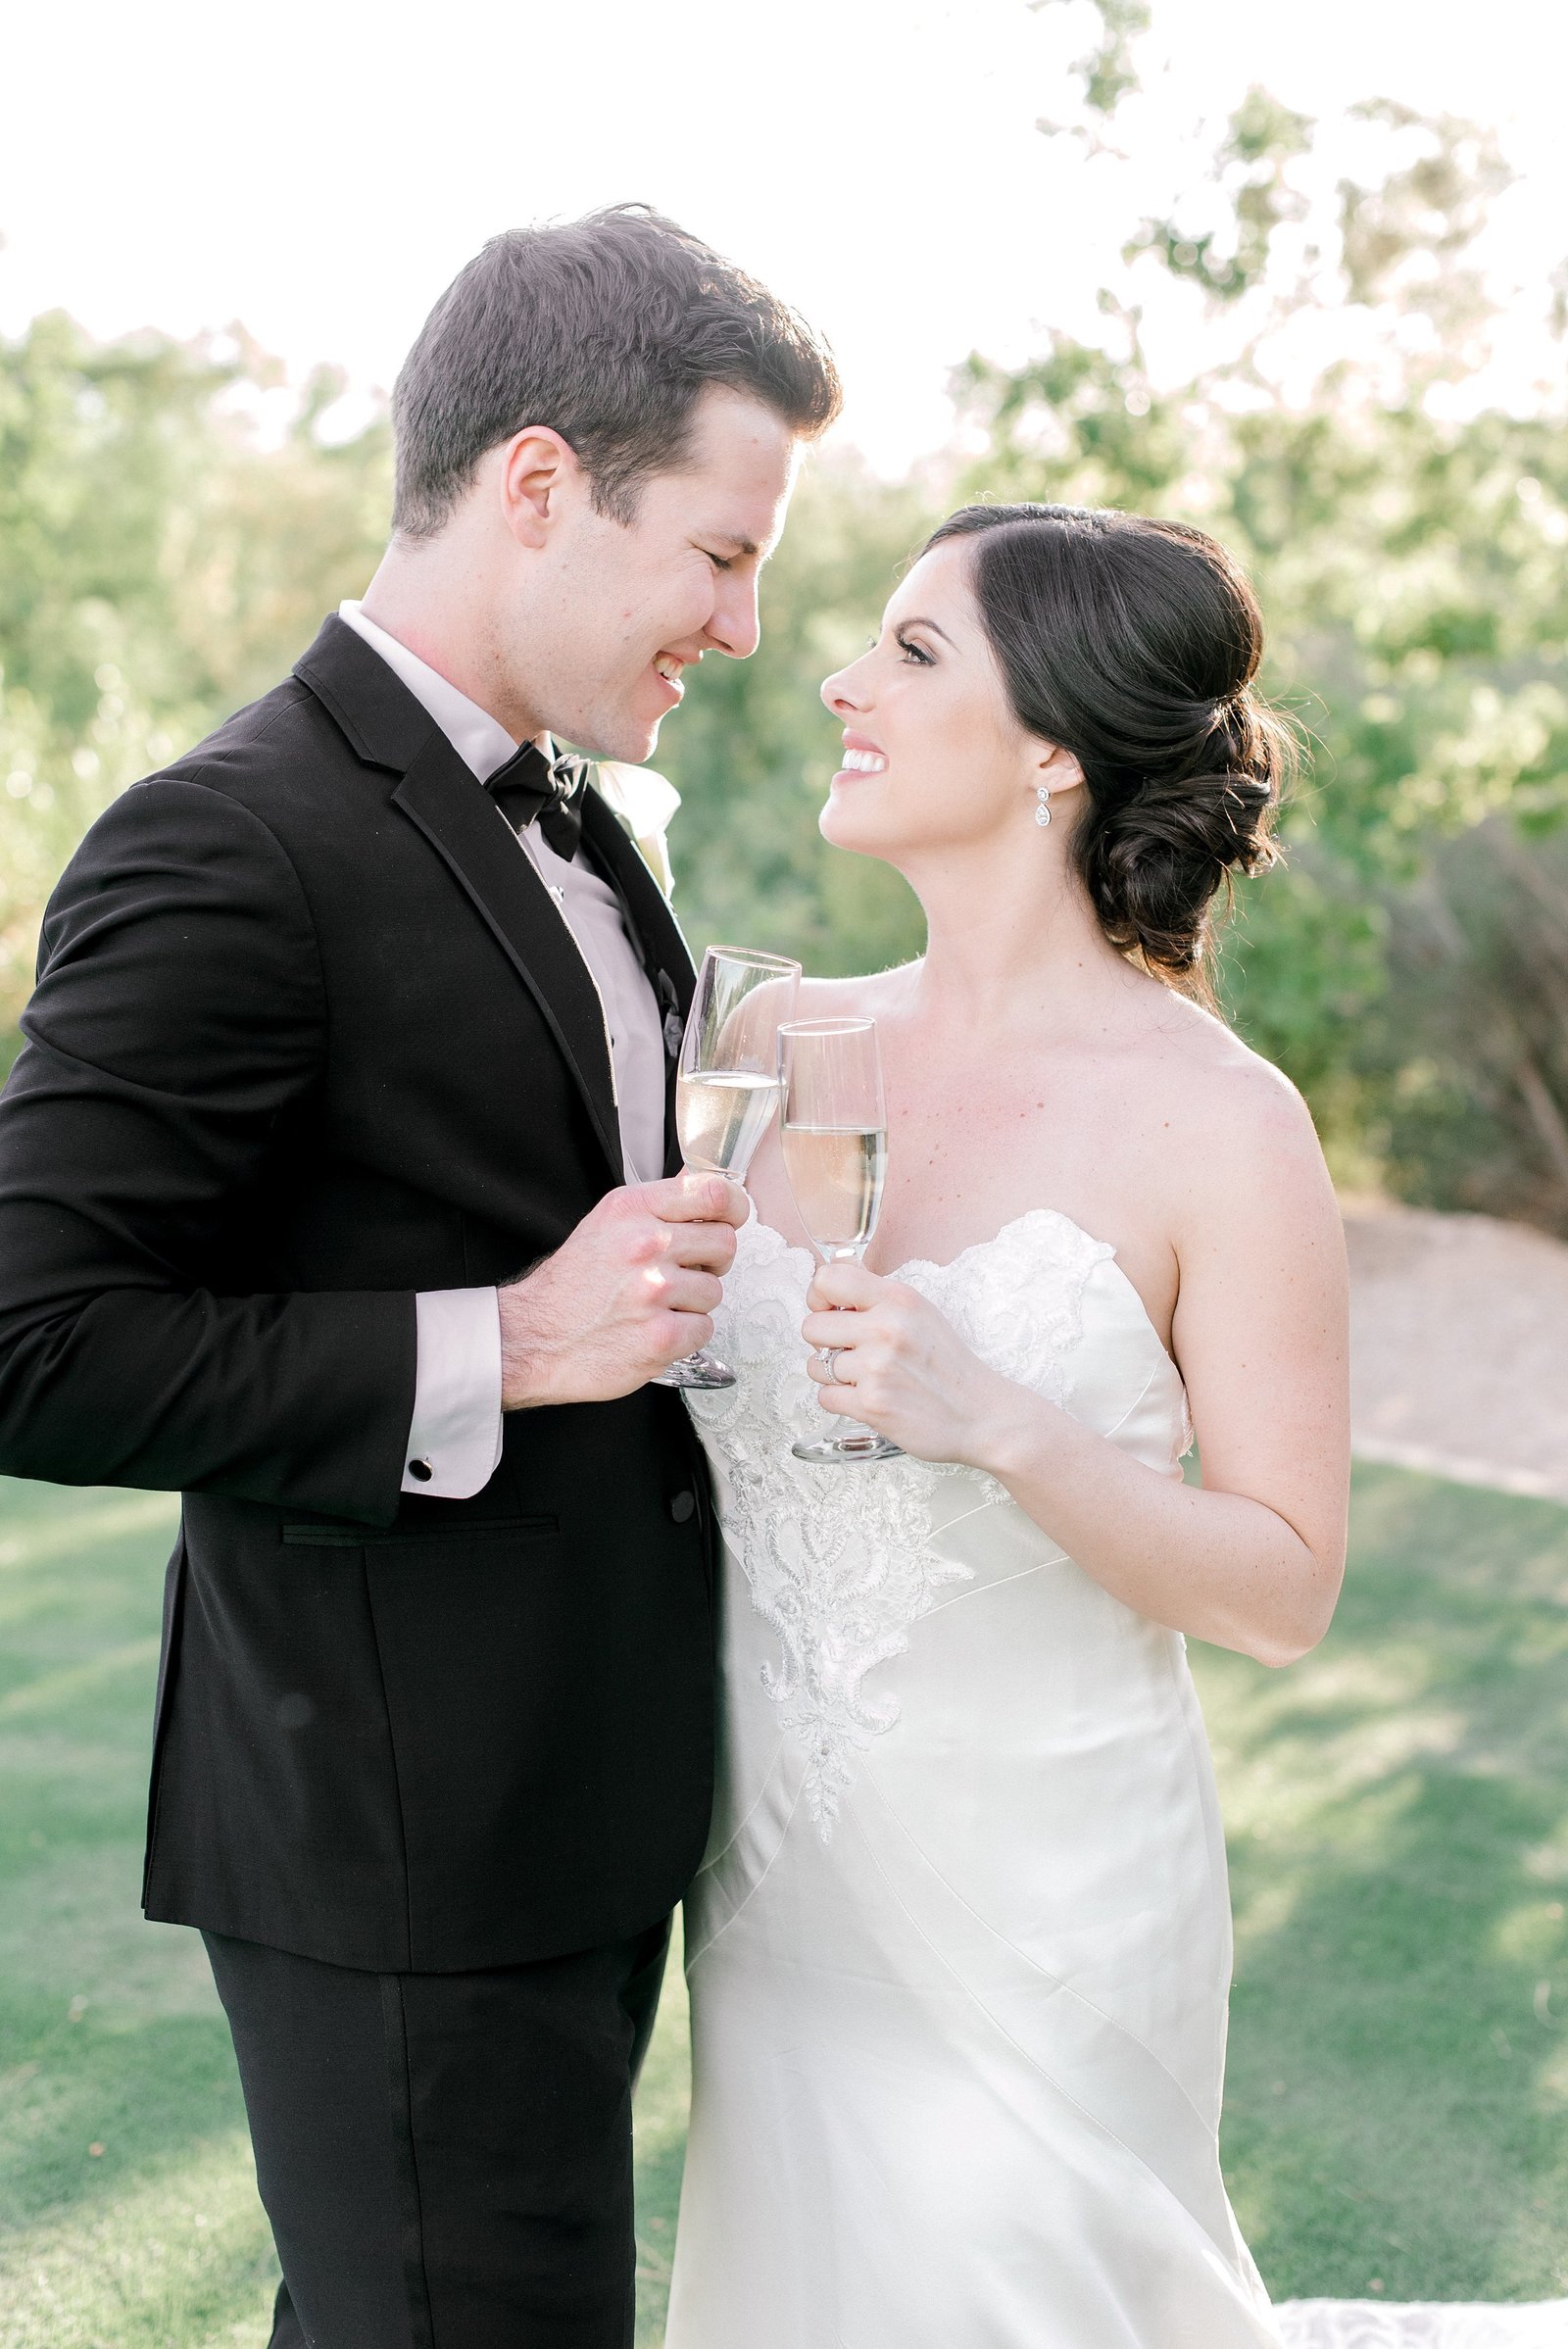 Paradise Valley County Club - Phoenix Wedding Photography - Marisa Belle Photography-44